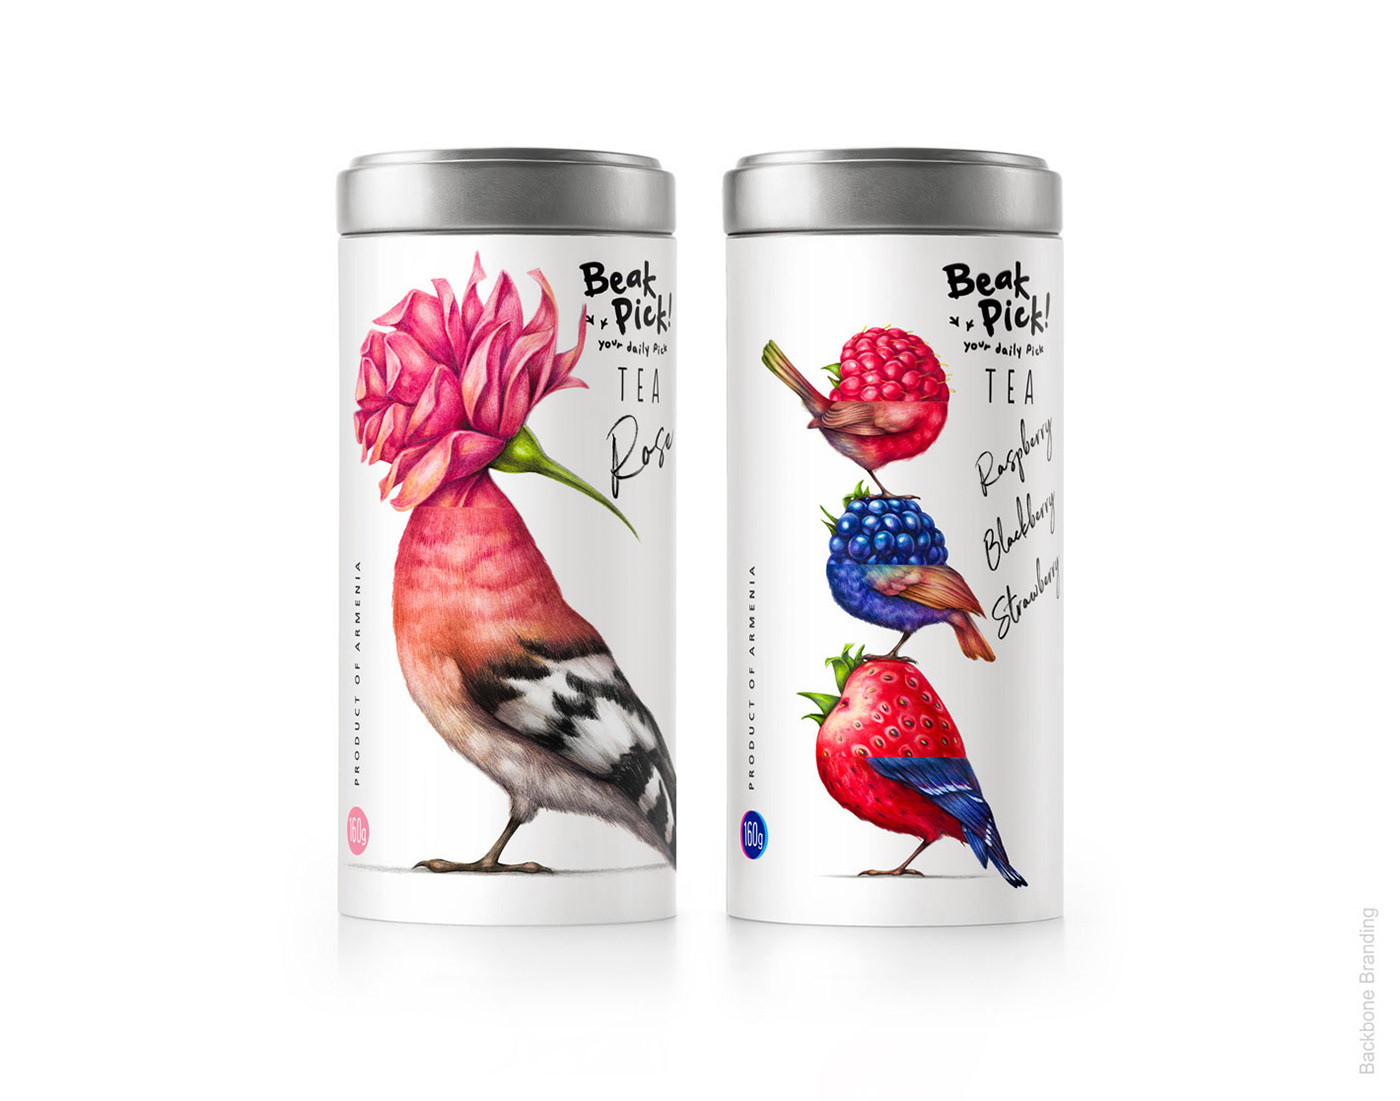 birds Fruit ILLUSTRATION  Label branding  design Packaging jam concept Nature